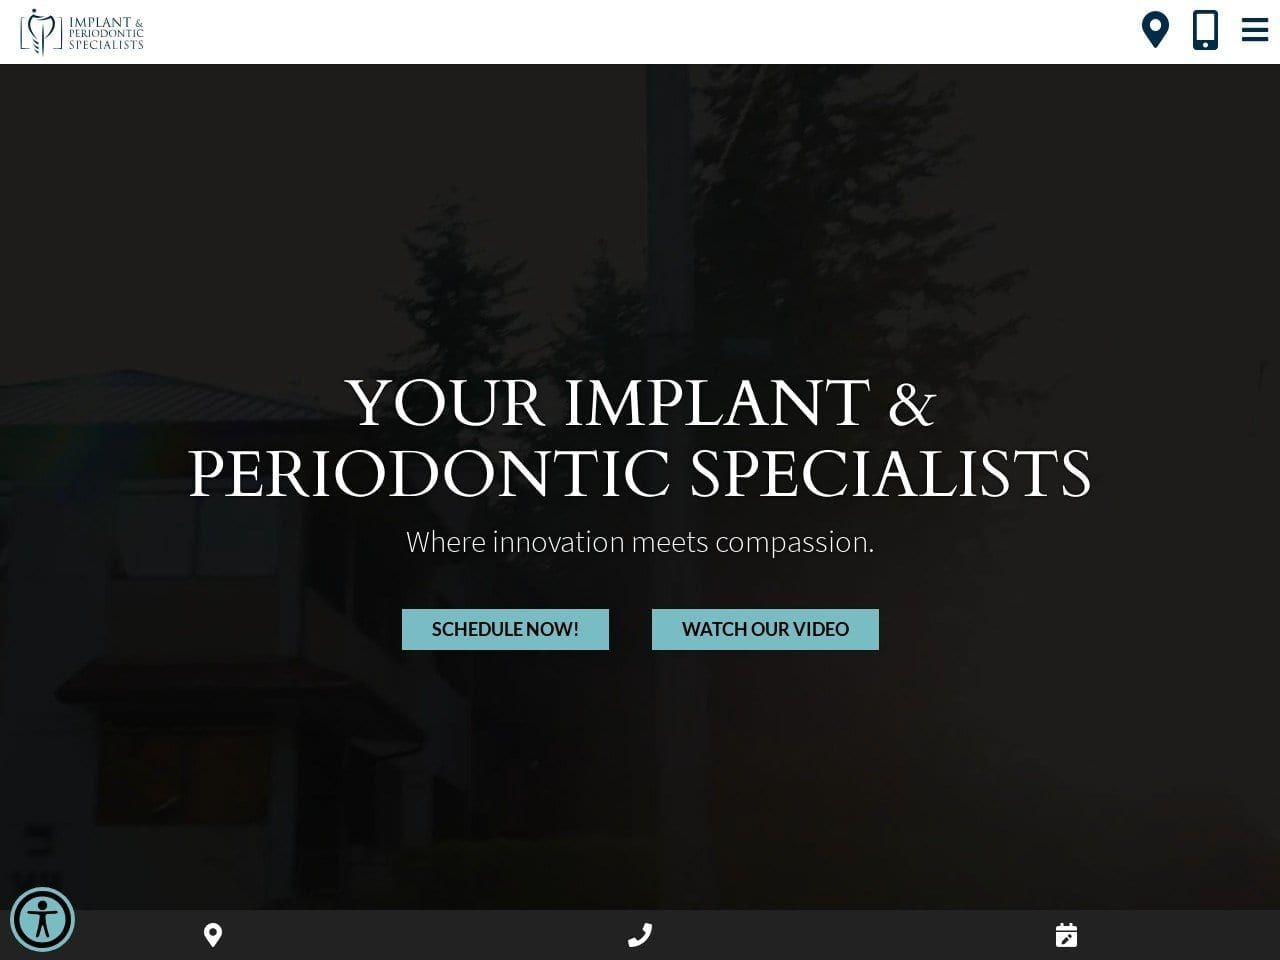 Implant and Periodontic Specialists of Bellevue Website Screenshot from bellevueperio.com